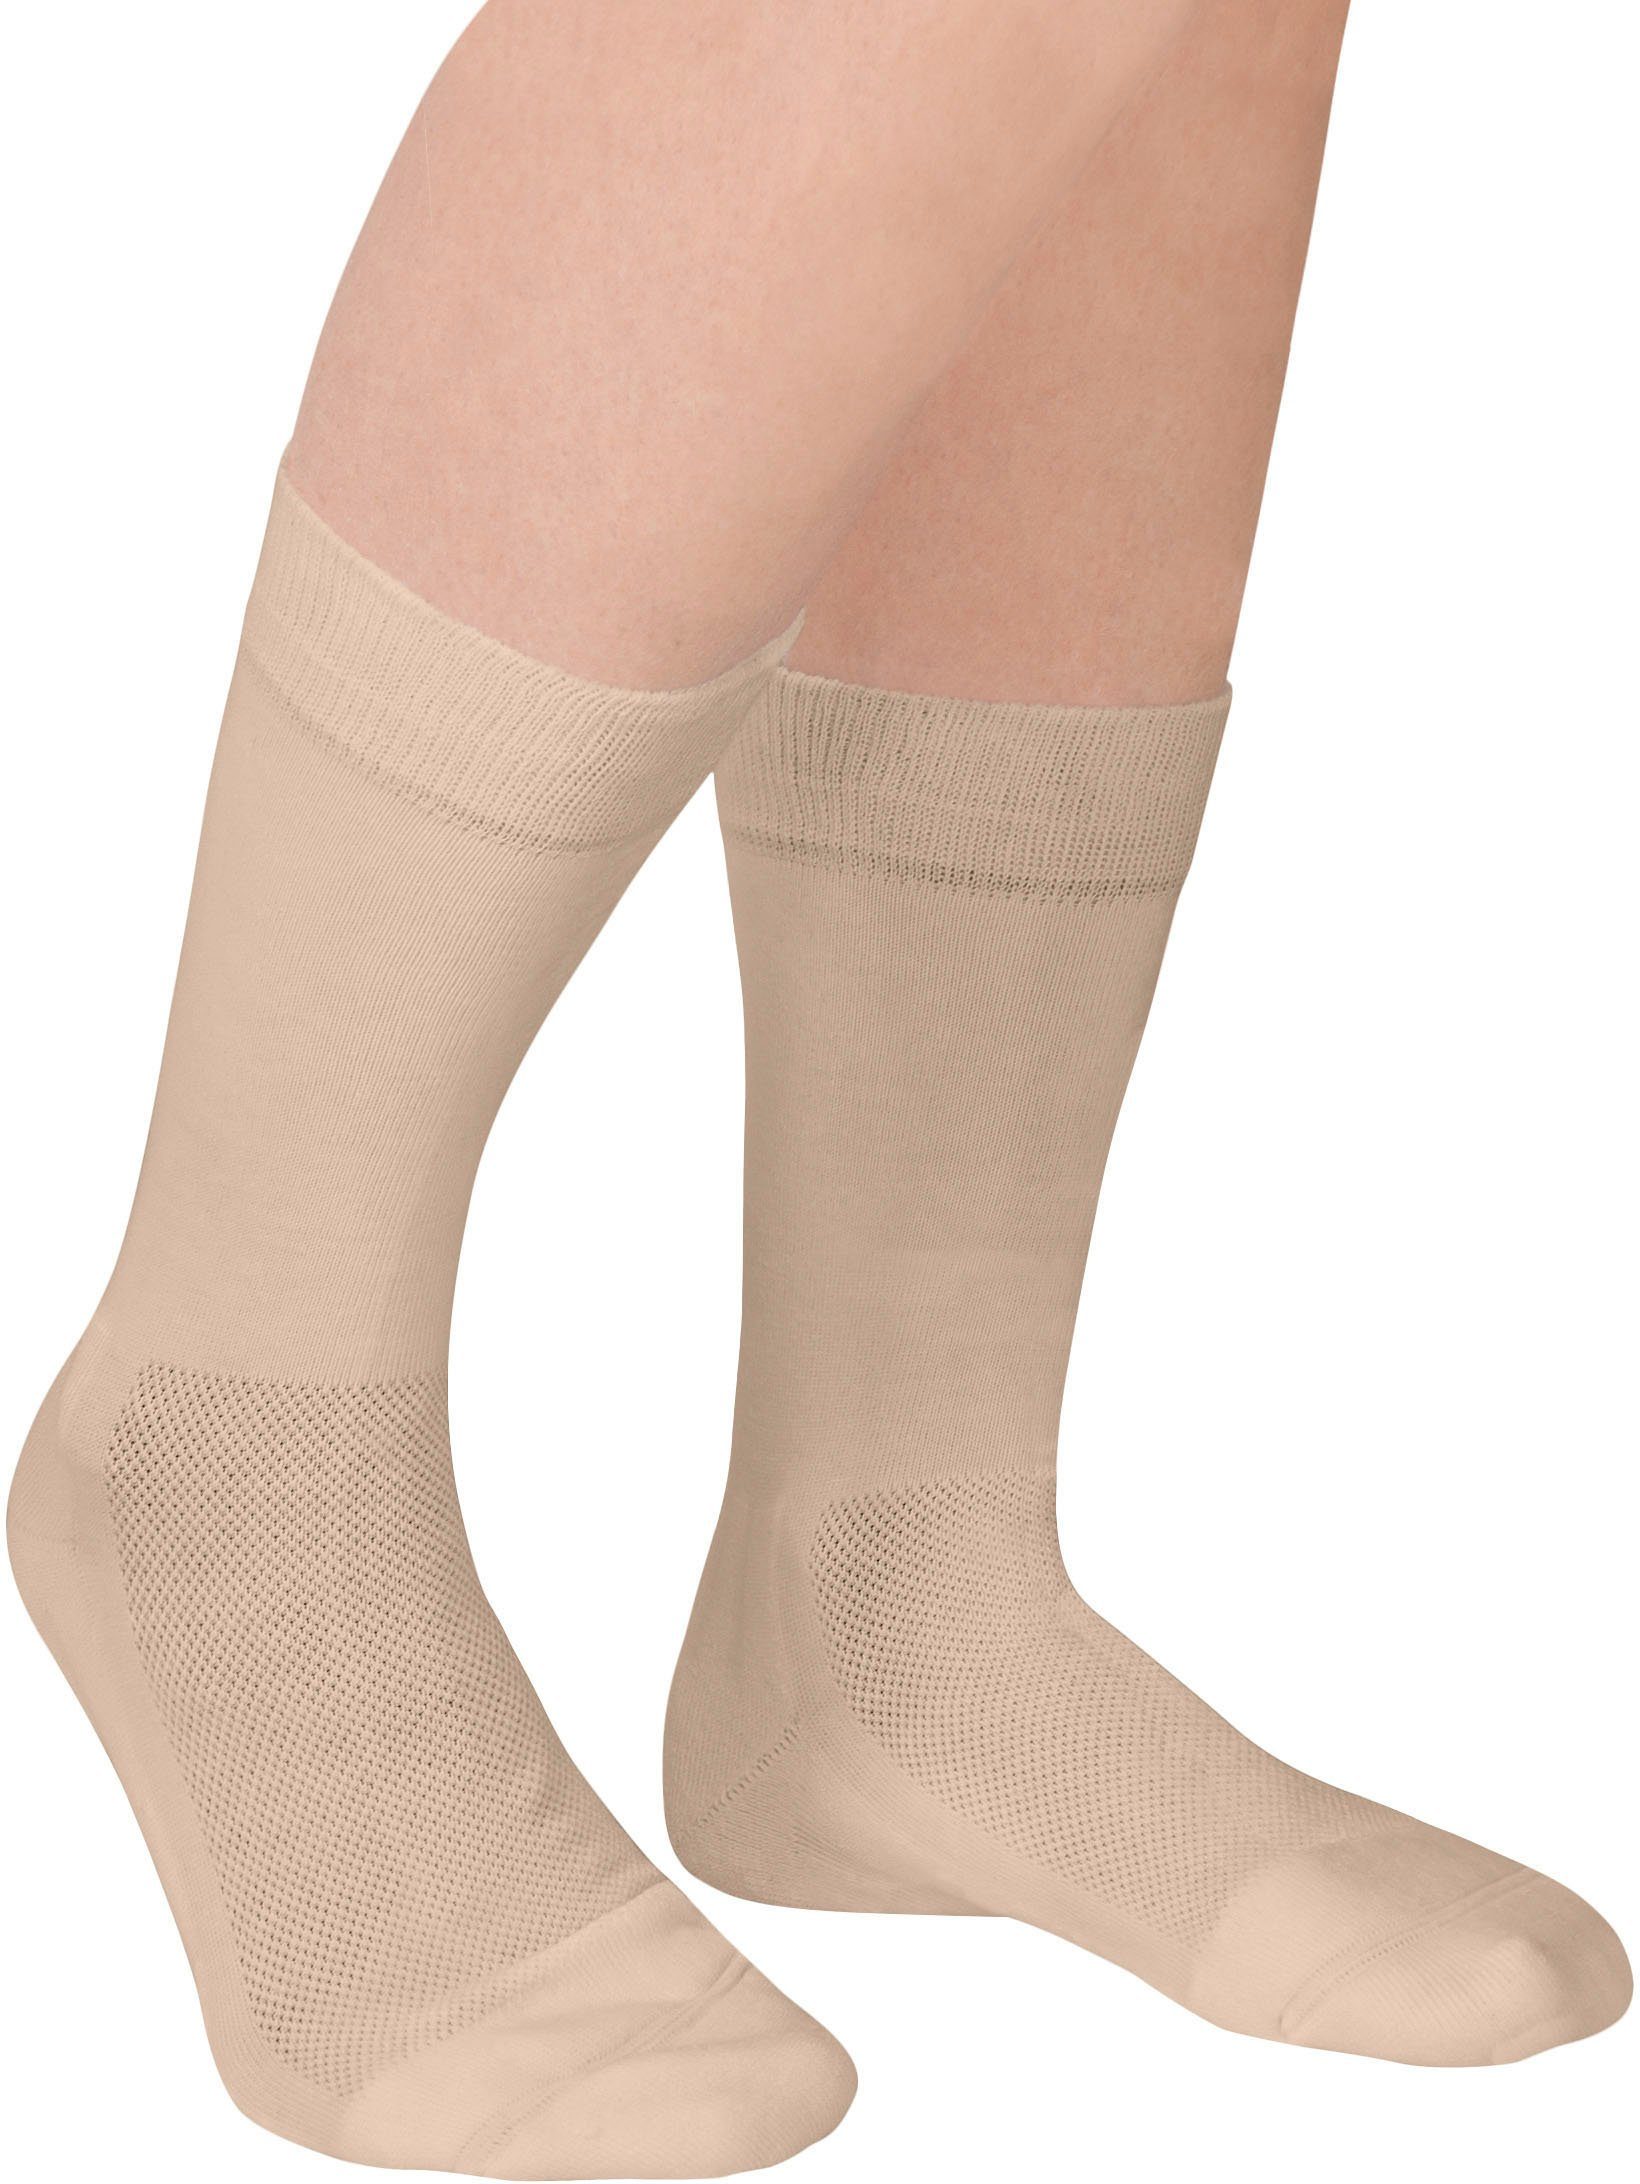 Fußgut Diabetikersocken beige Venenfeund (2-Paar) Socken Sensitiv